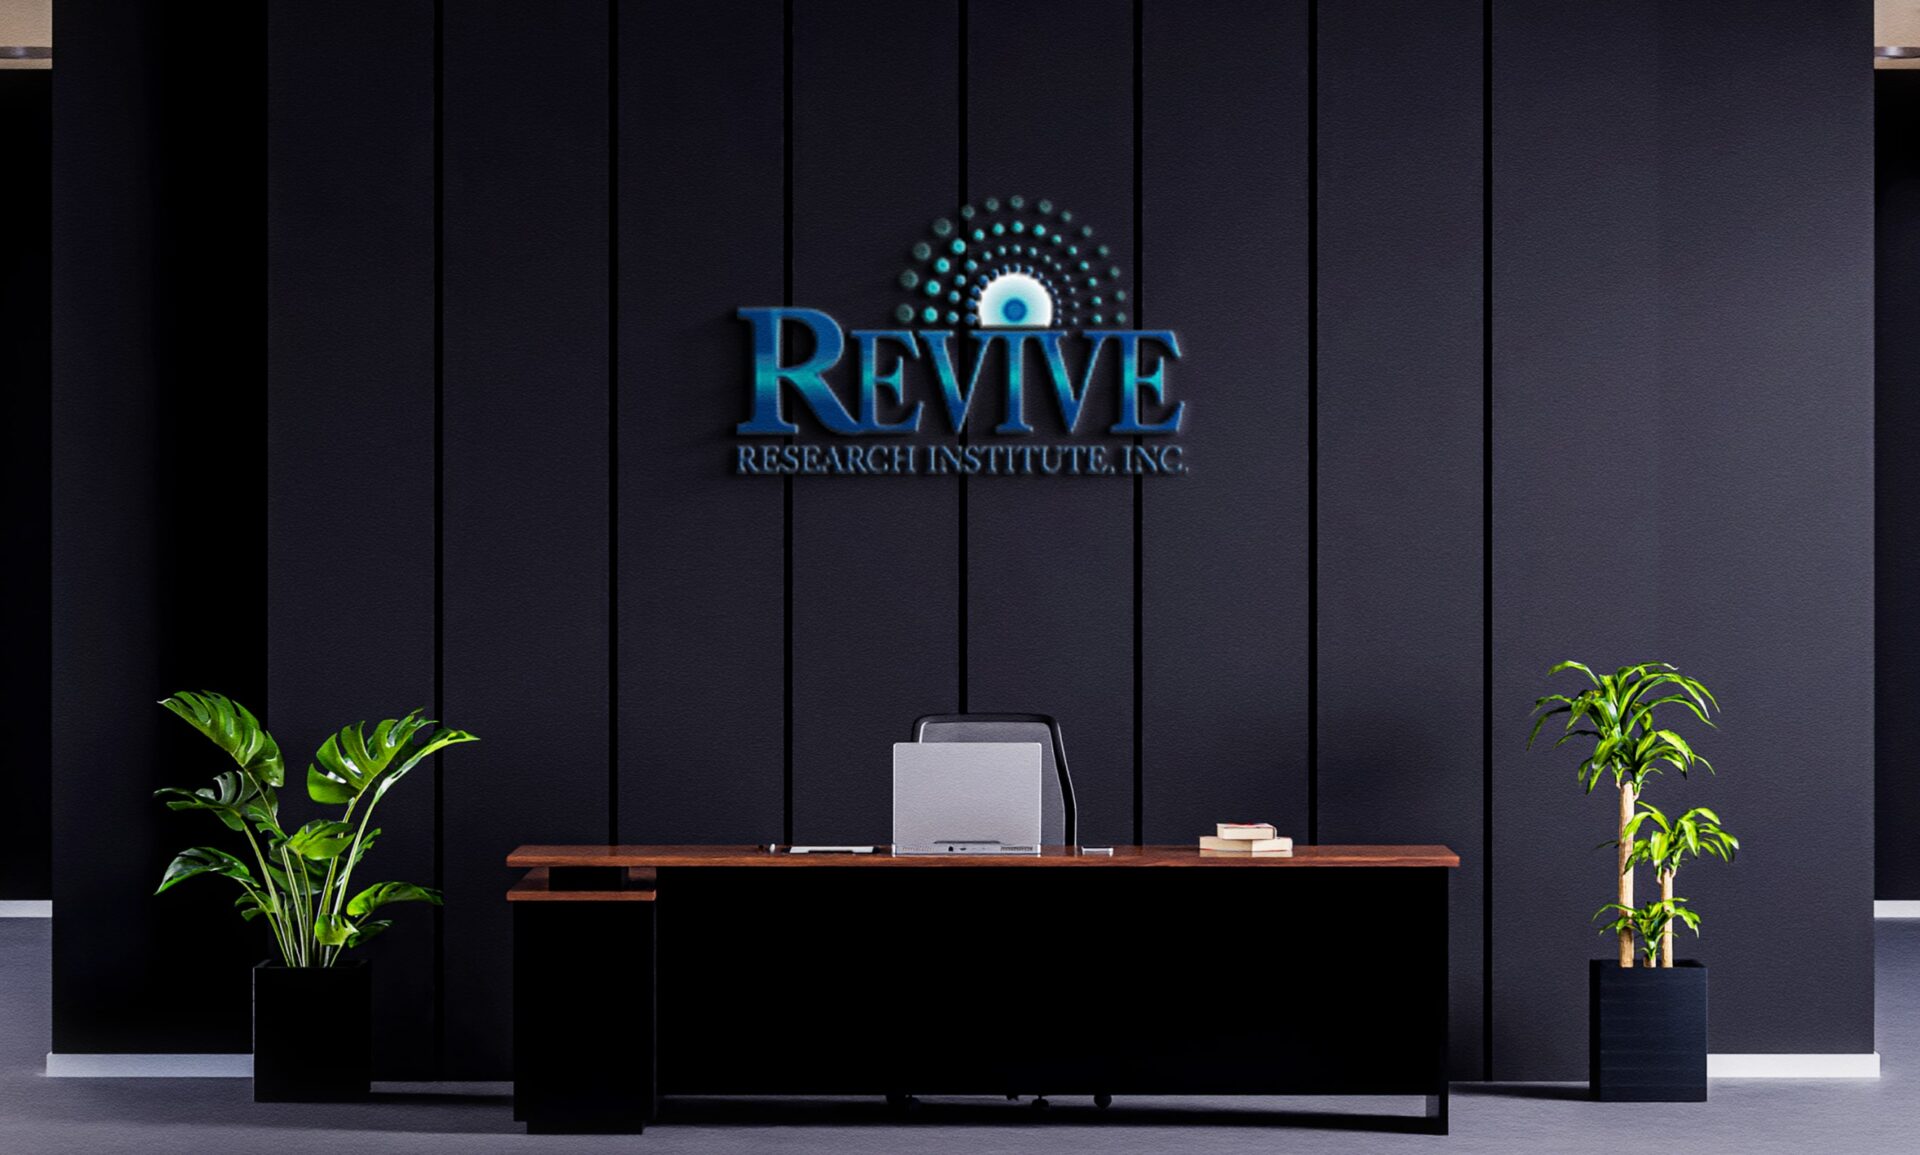 Revive Research Institute